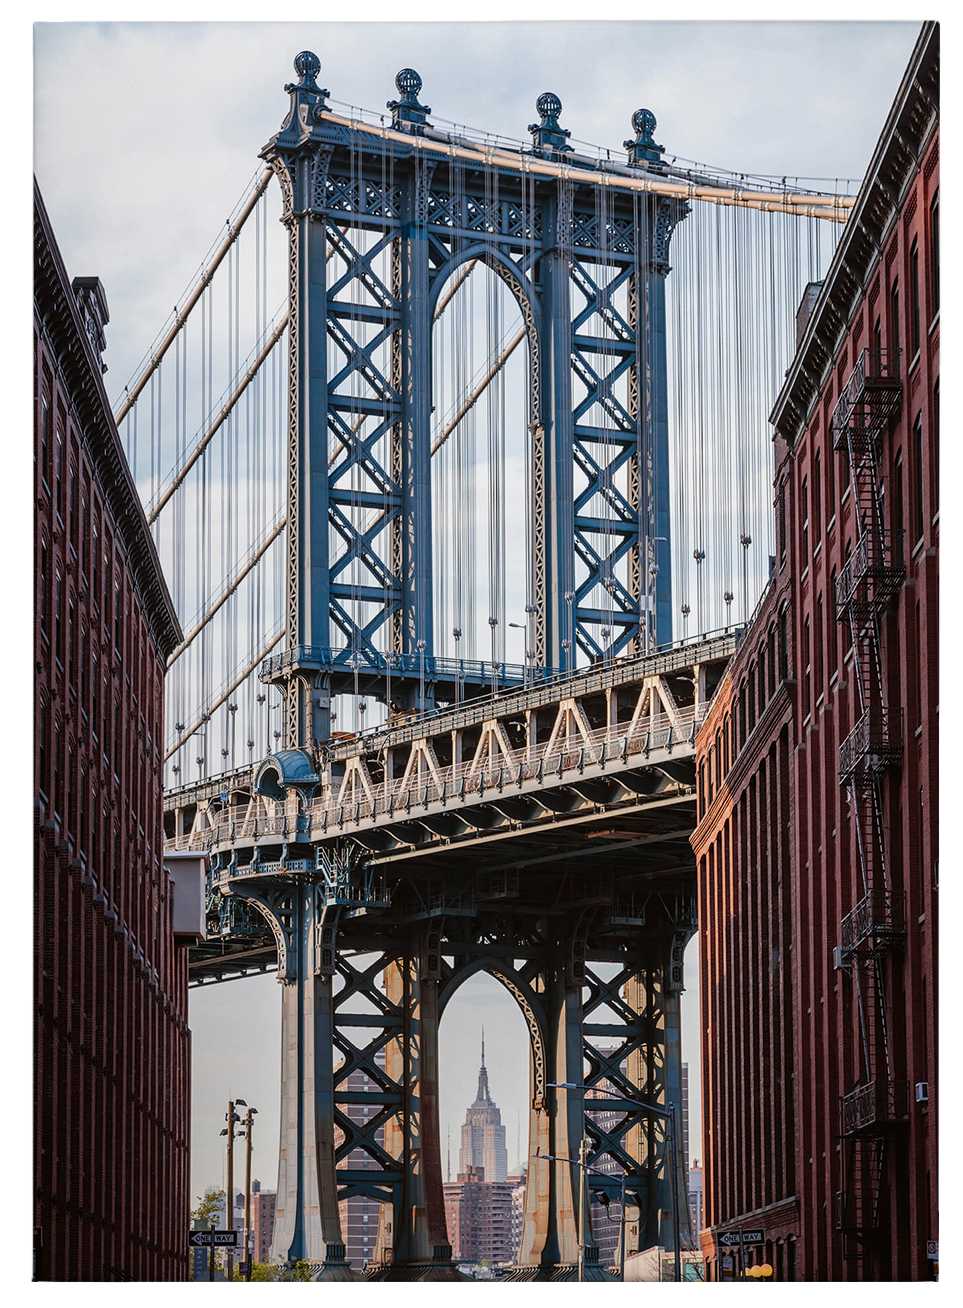             Canvas print New York Brooklyn Bridge, photo by Colombo
        